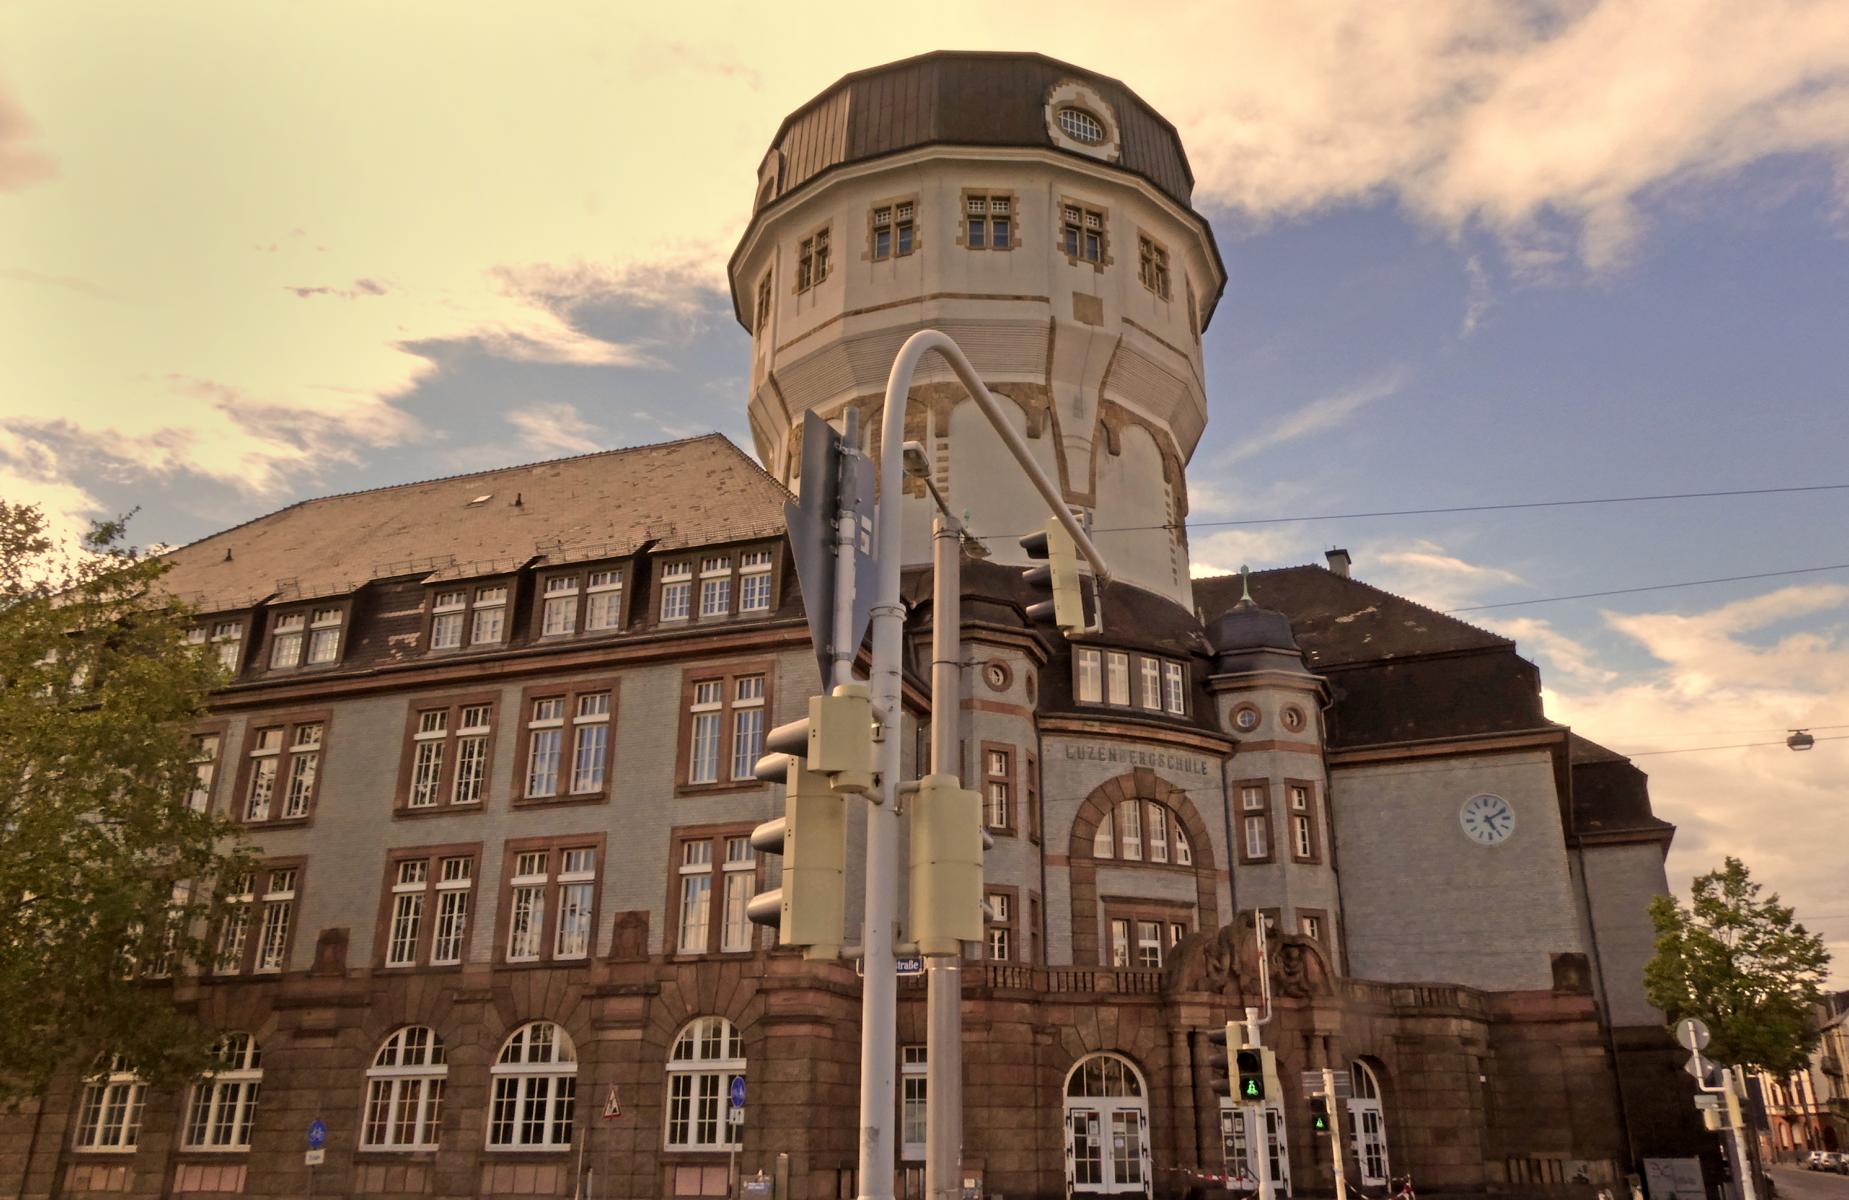 Luzenbergschule mit Wasserturm